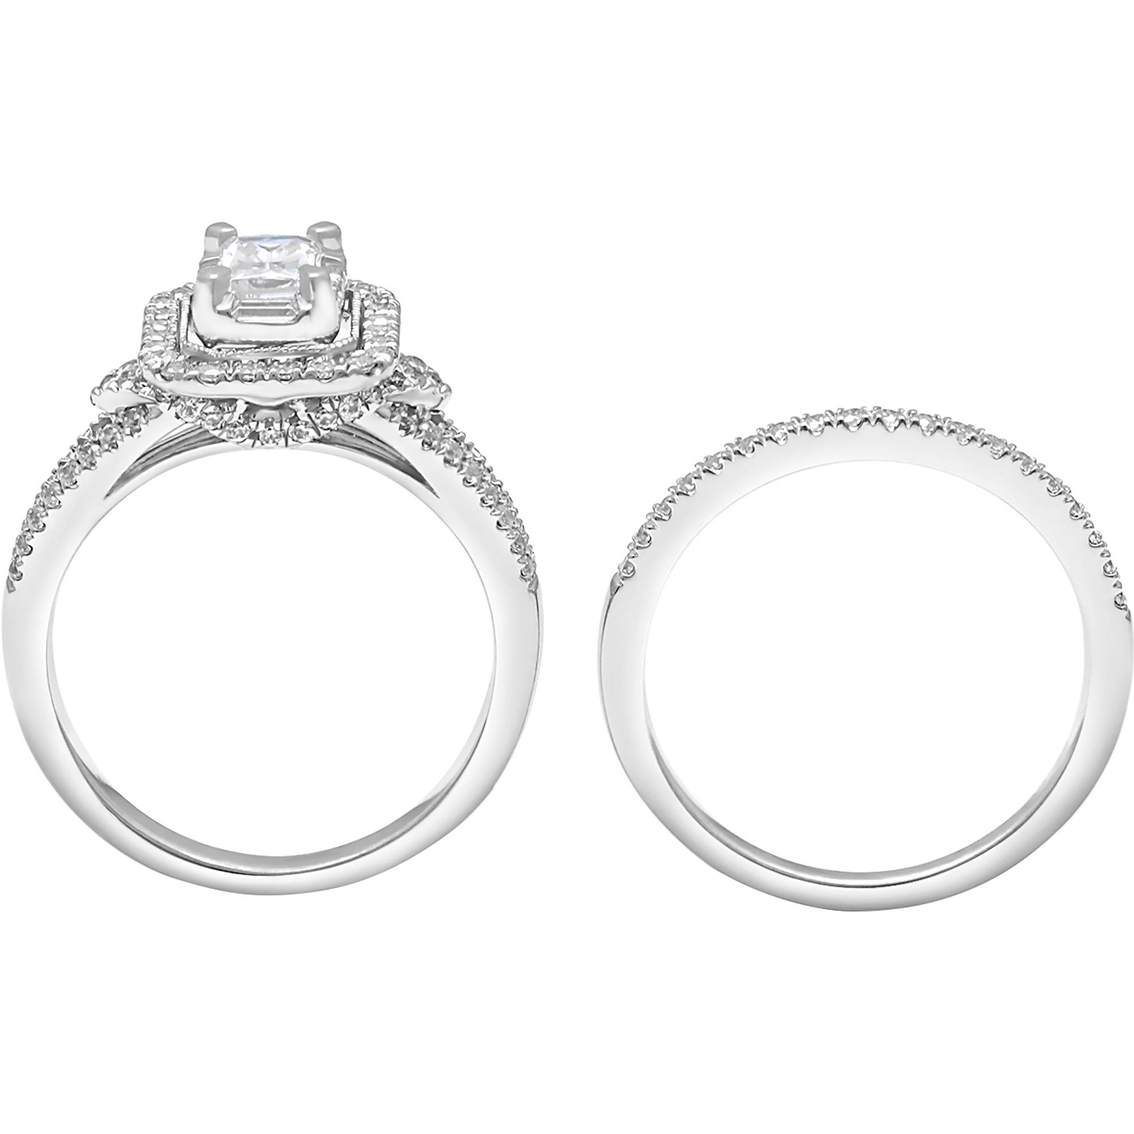 American Rose 14K White Gold 1 1/4 CTW Emerald Cut Diamond Bridal Set - Image 3 of 3